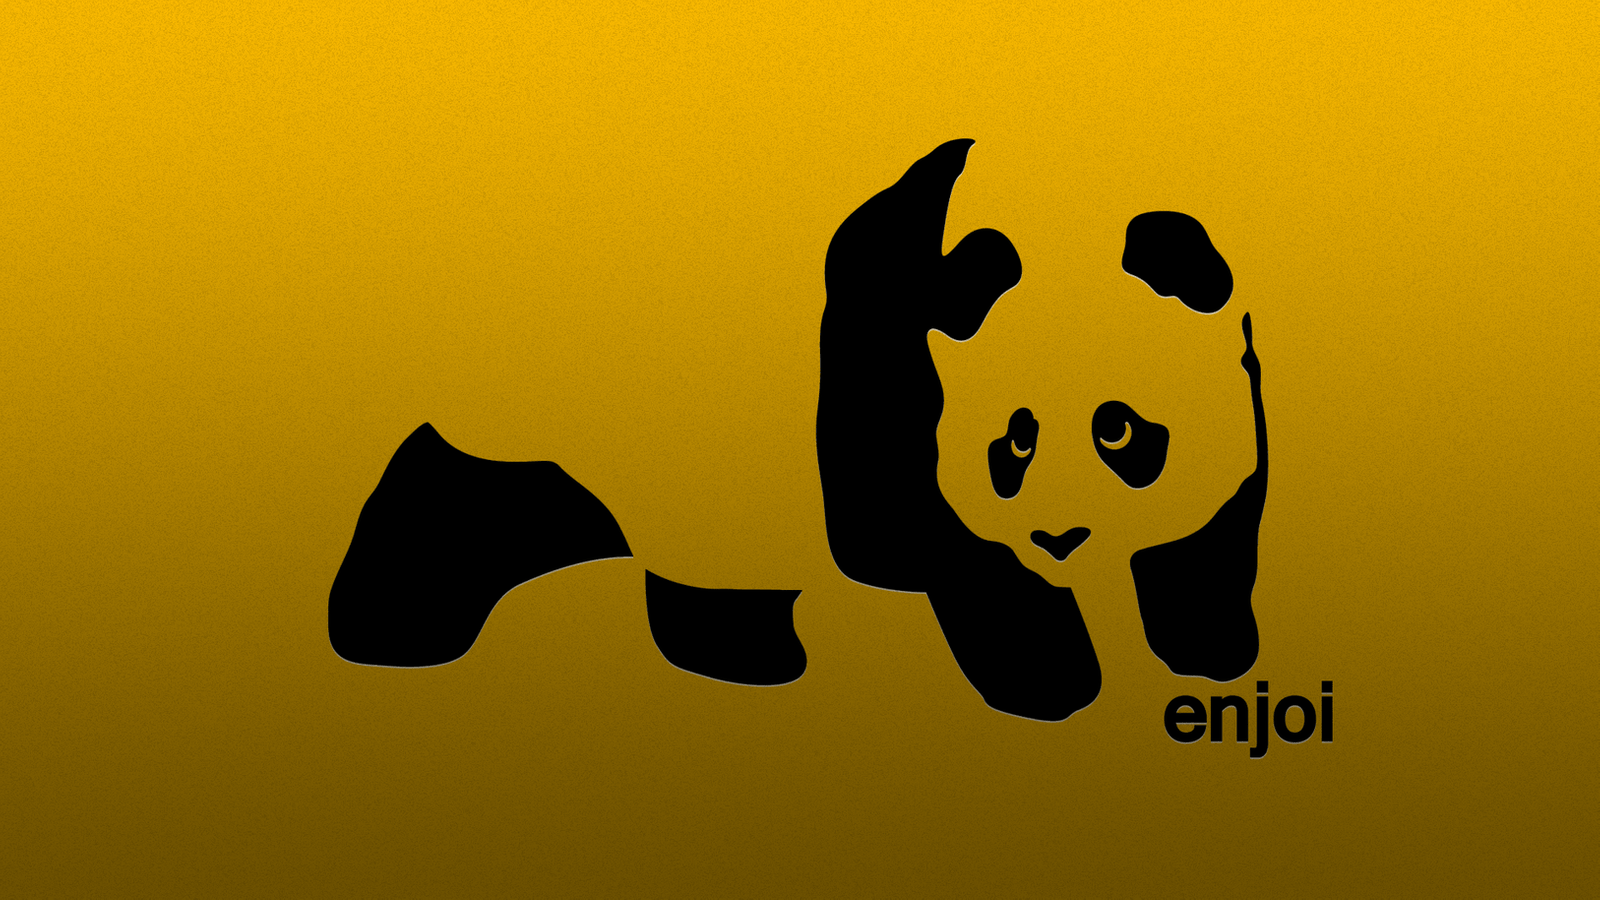 Cool Enjoi Panda Wallpaper. Cute